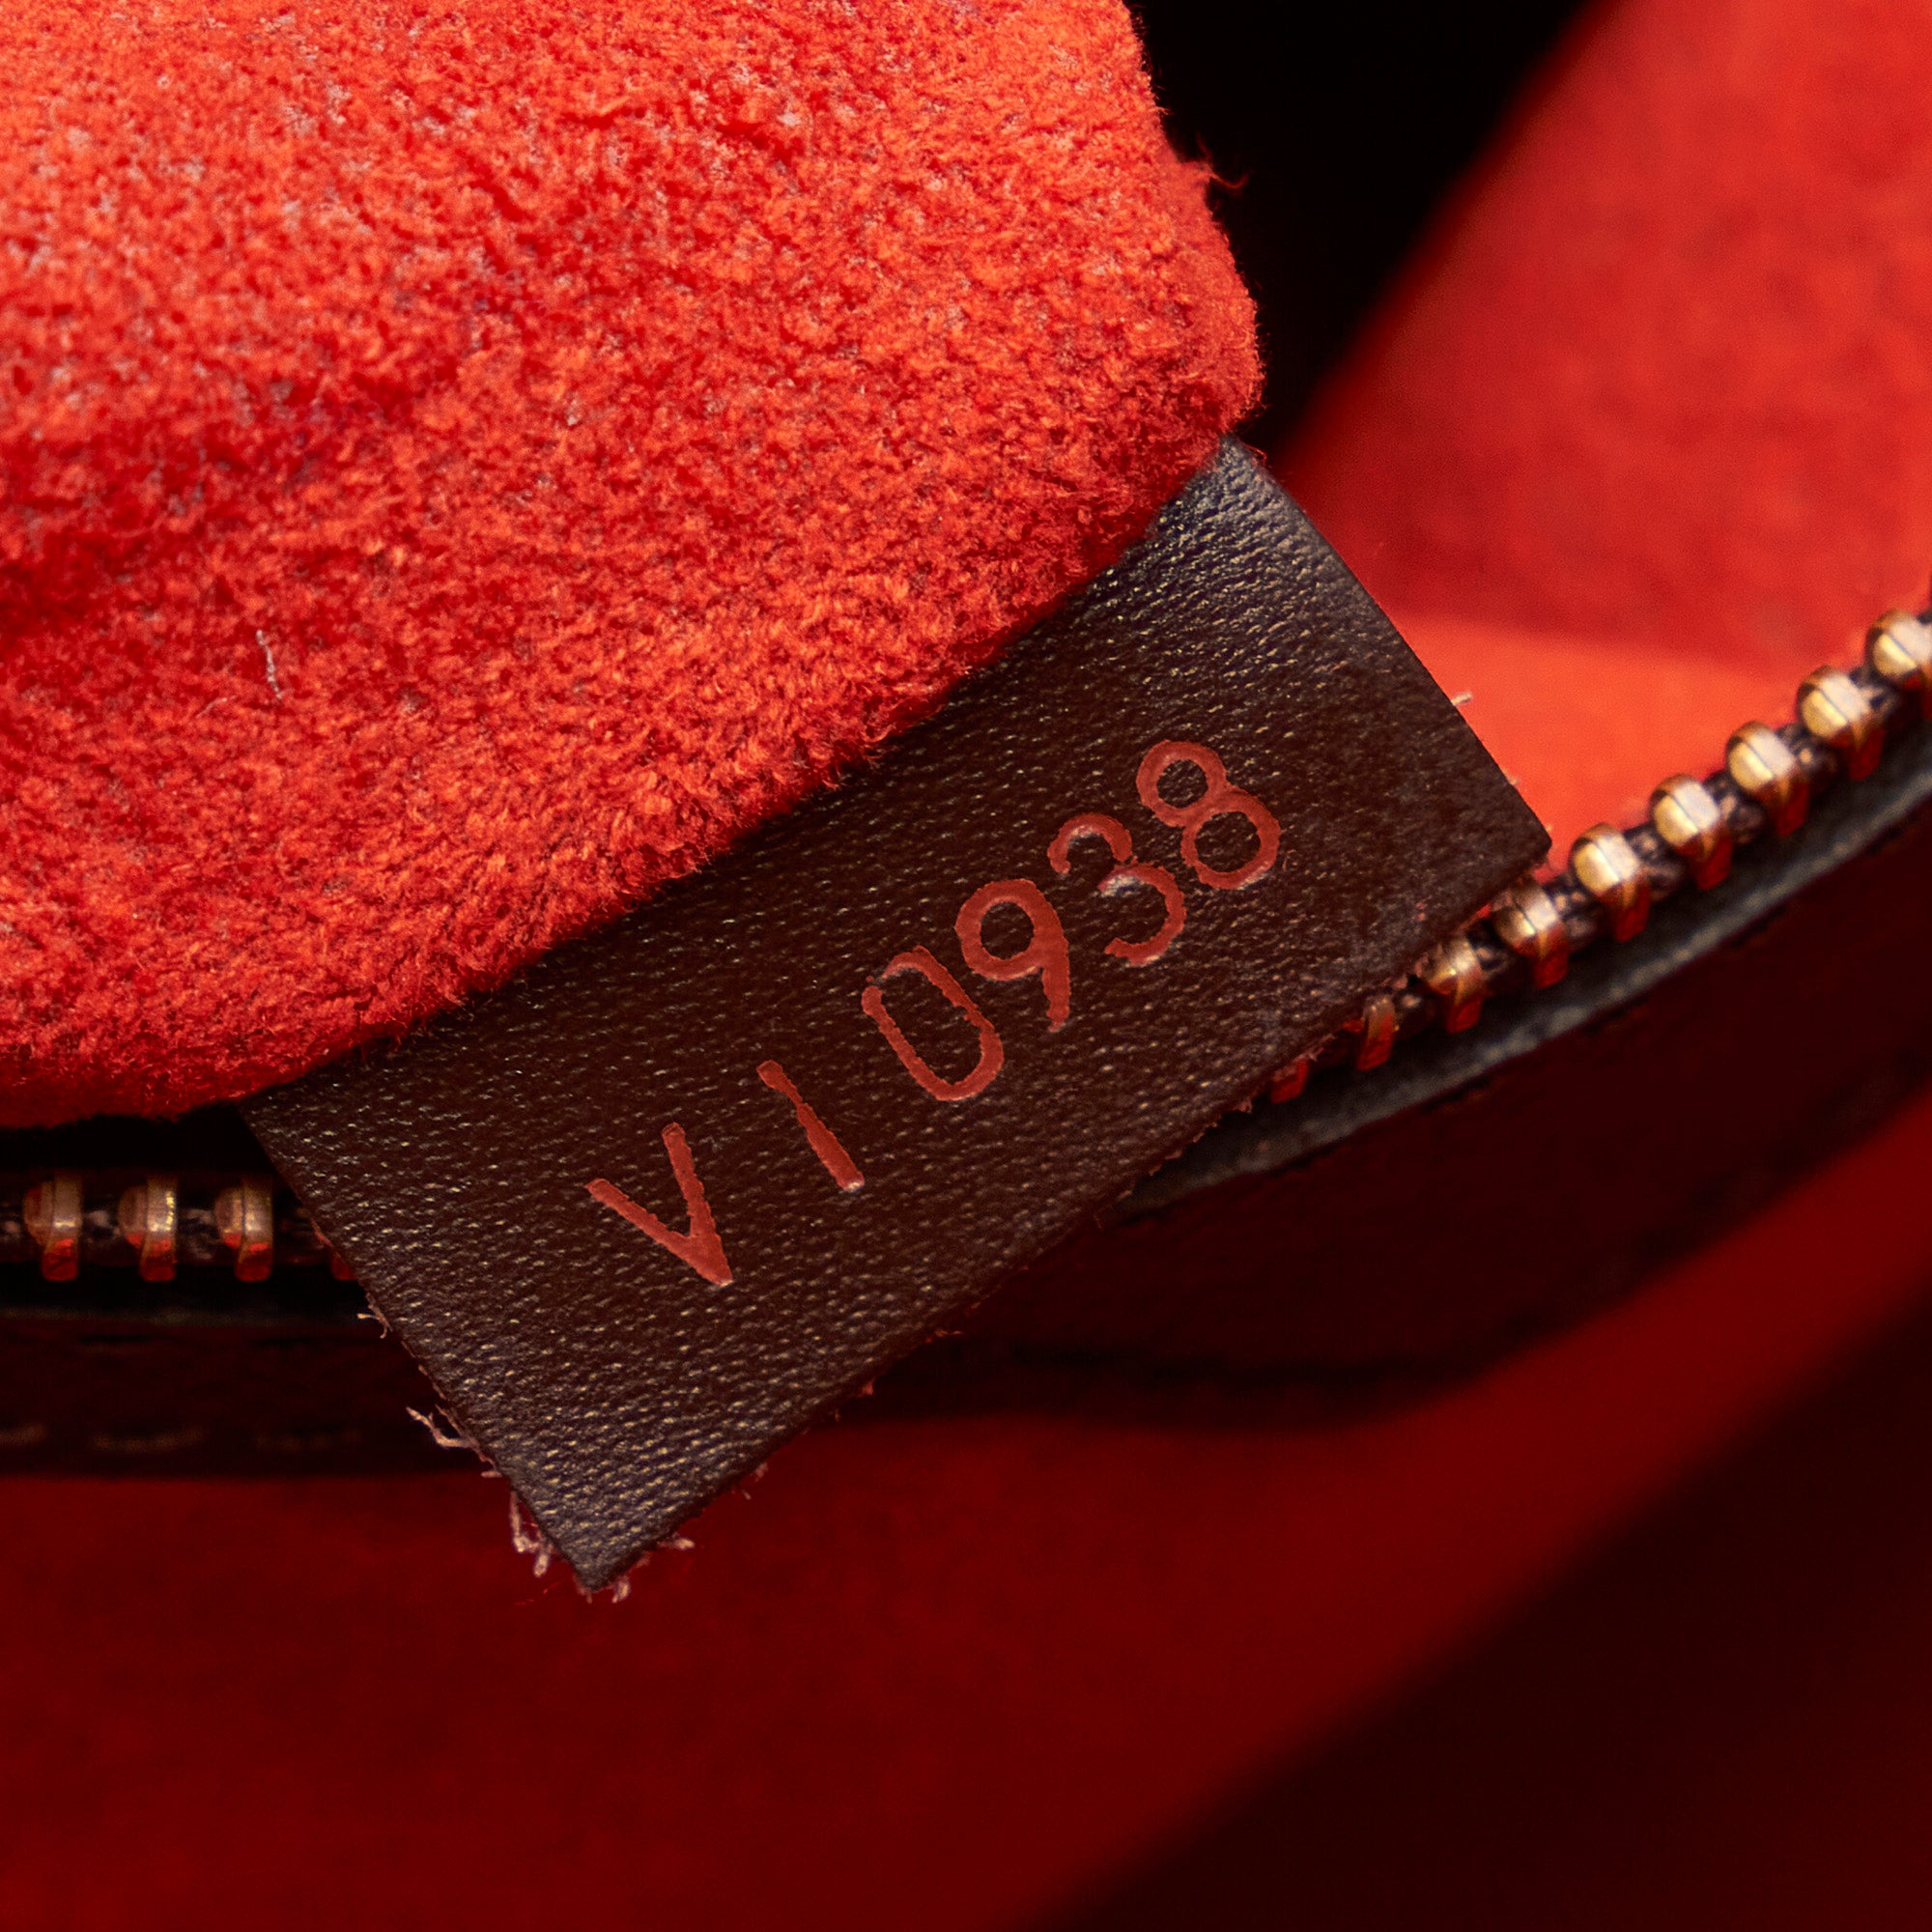 Brown Louis Vuitton Damier Ebene Brera Handbag – Designer Revival